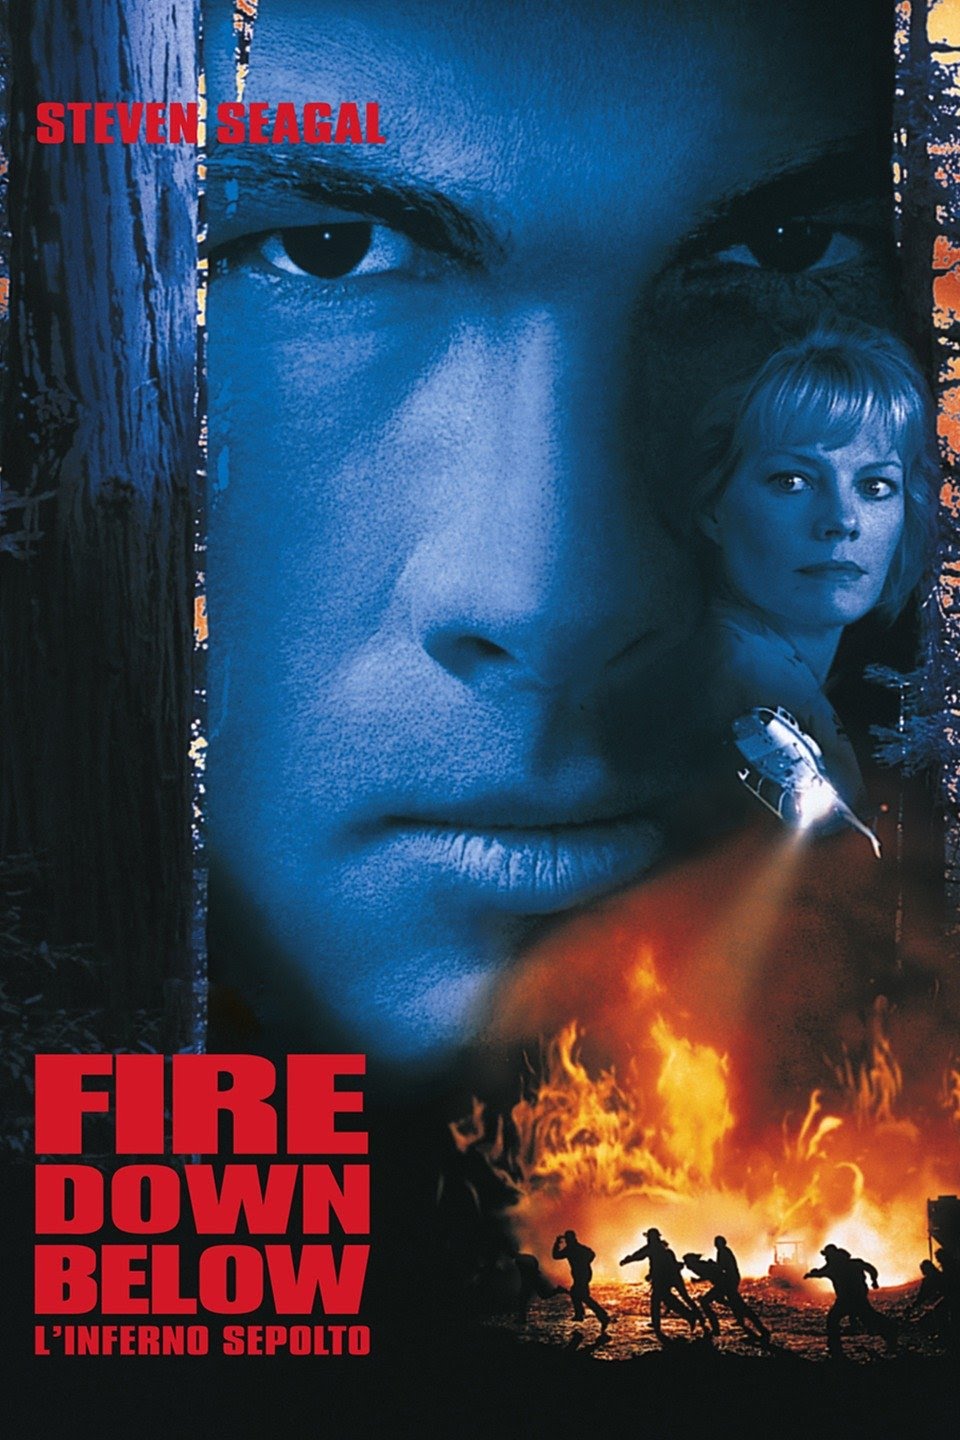 Fire Down Below – L’inferno sepolto [HD] (1997)